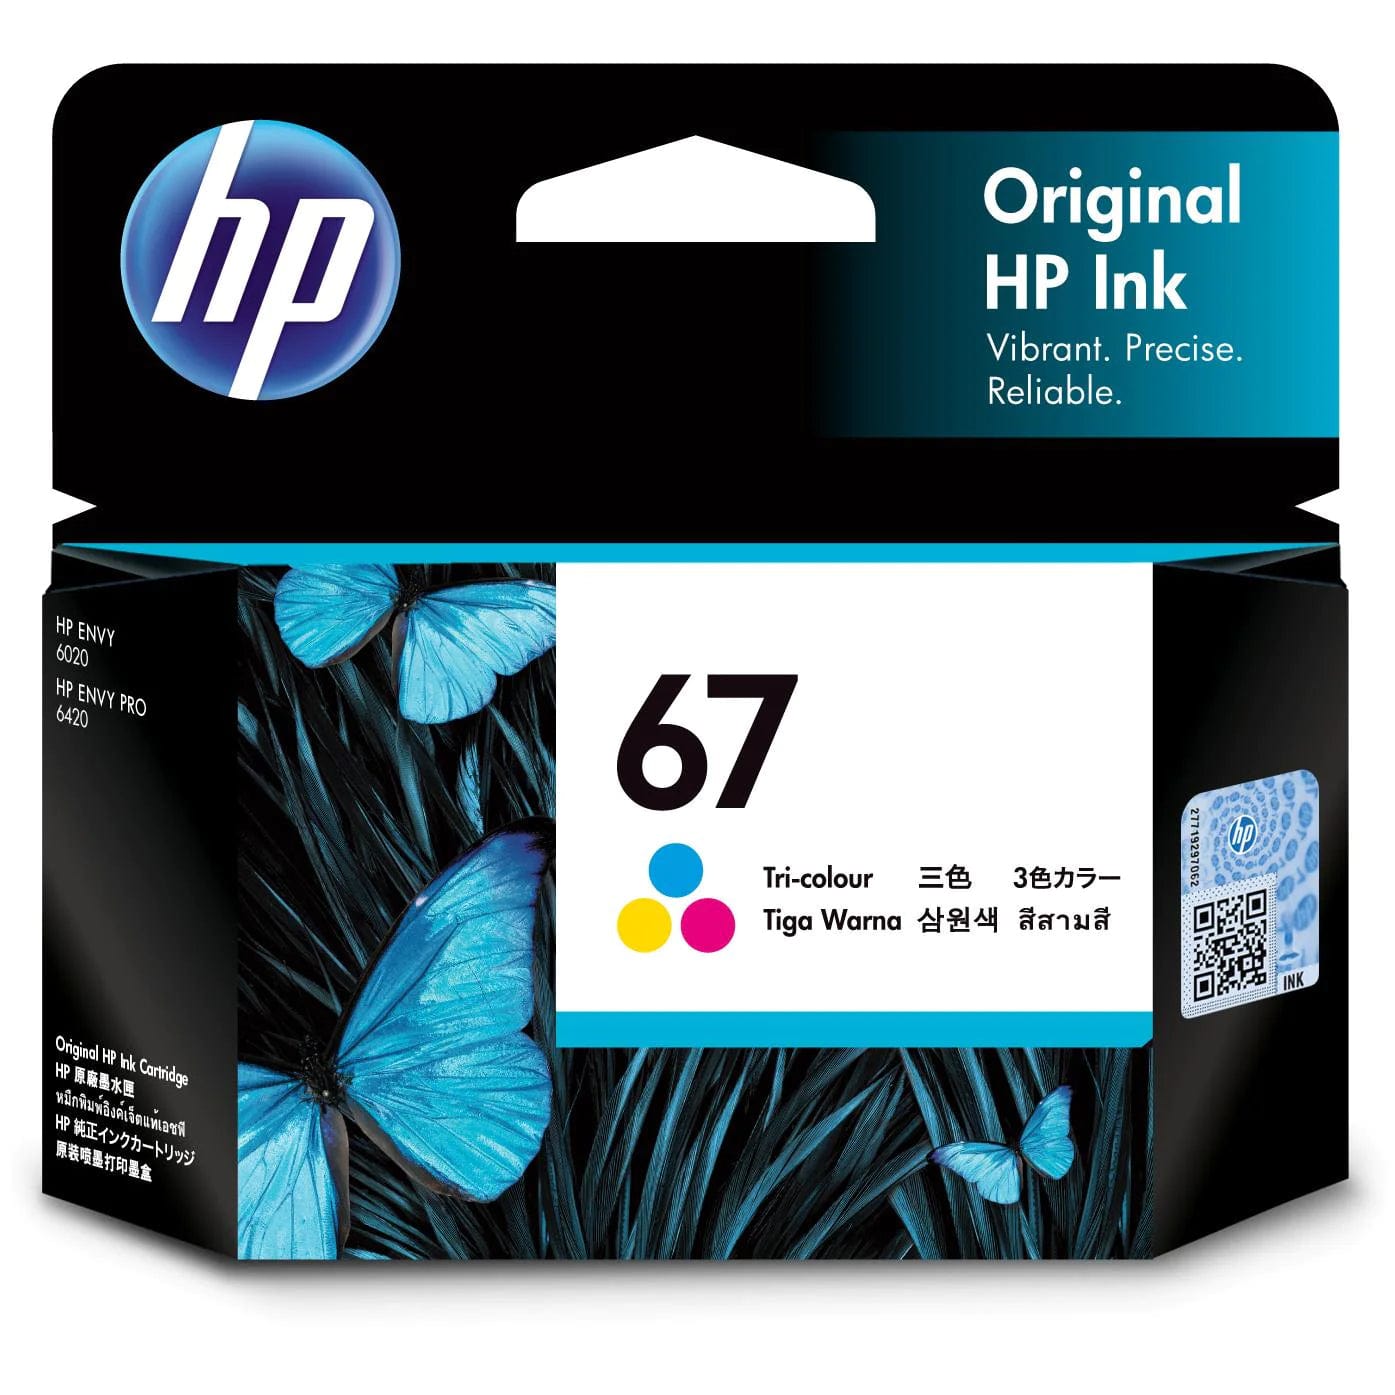 HP Printers, Copiers & Fax Machines 3YM55AA